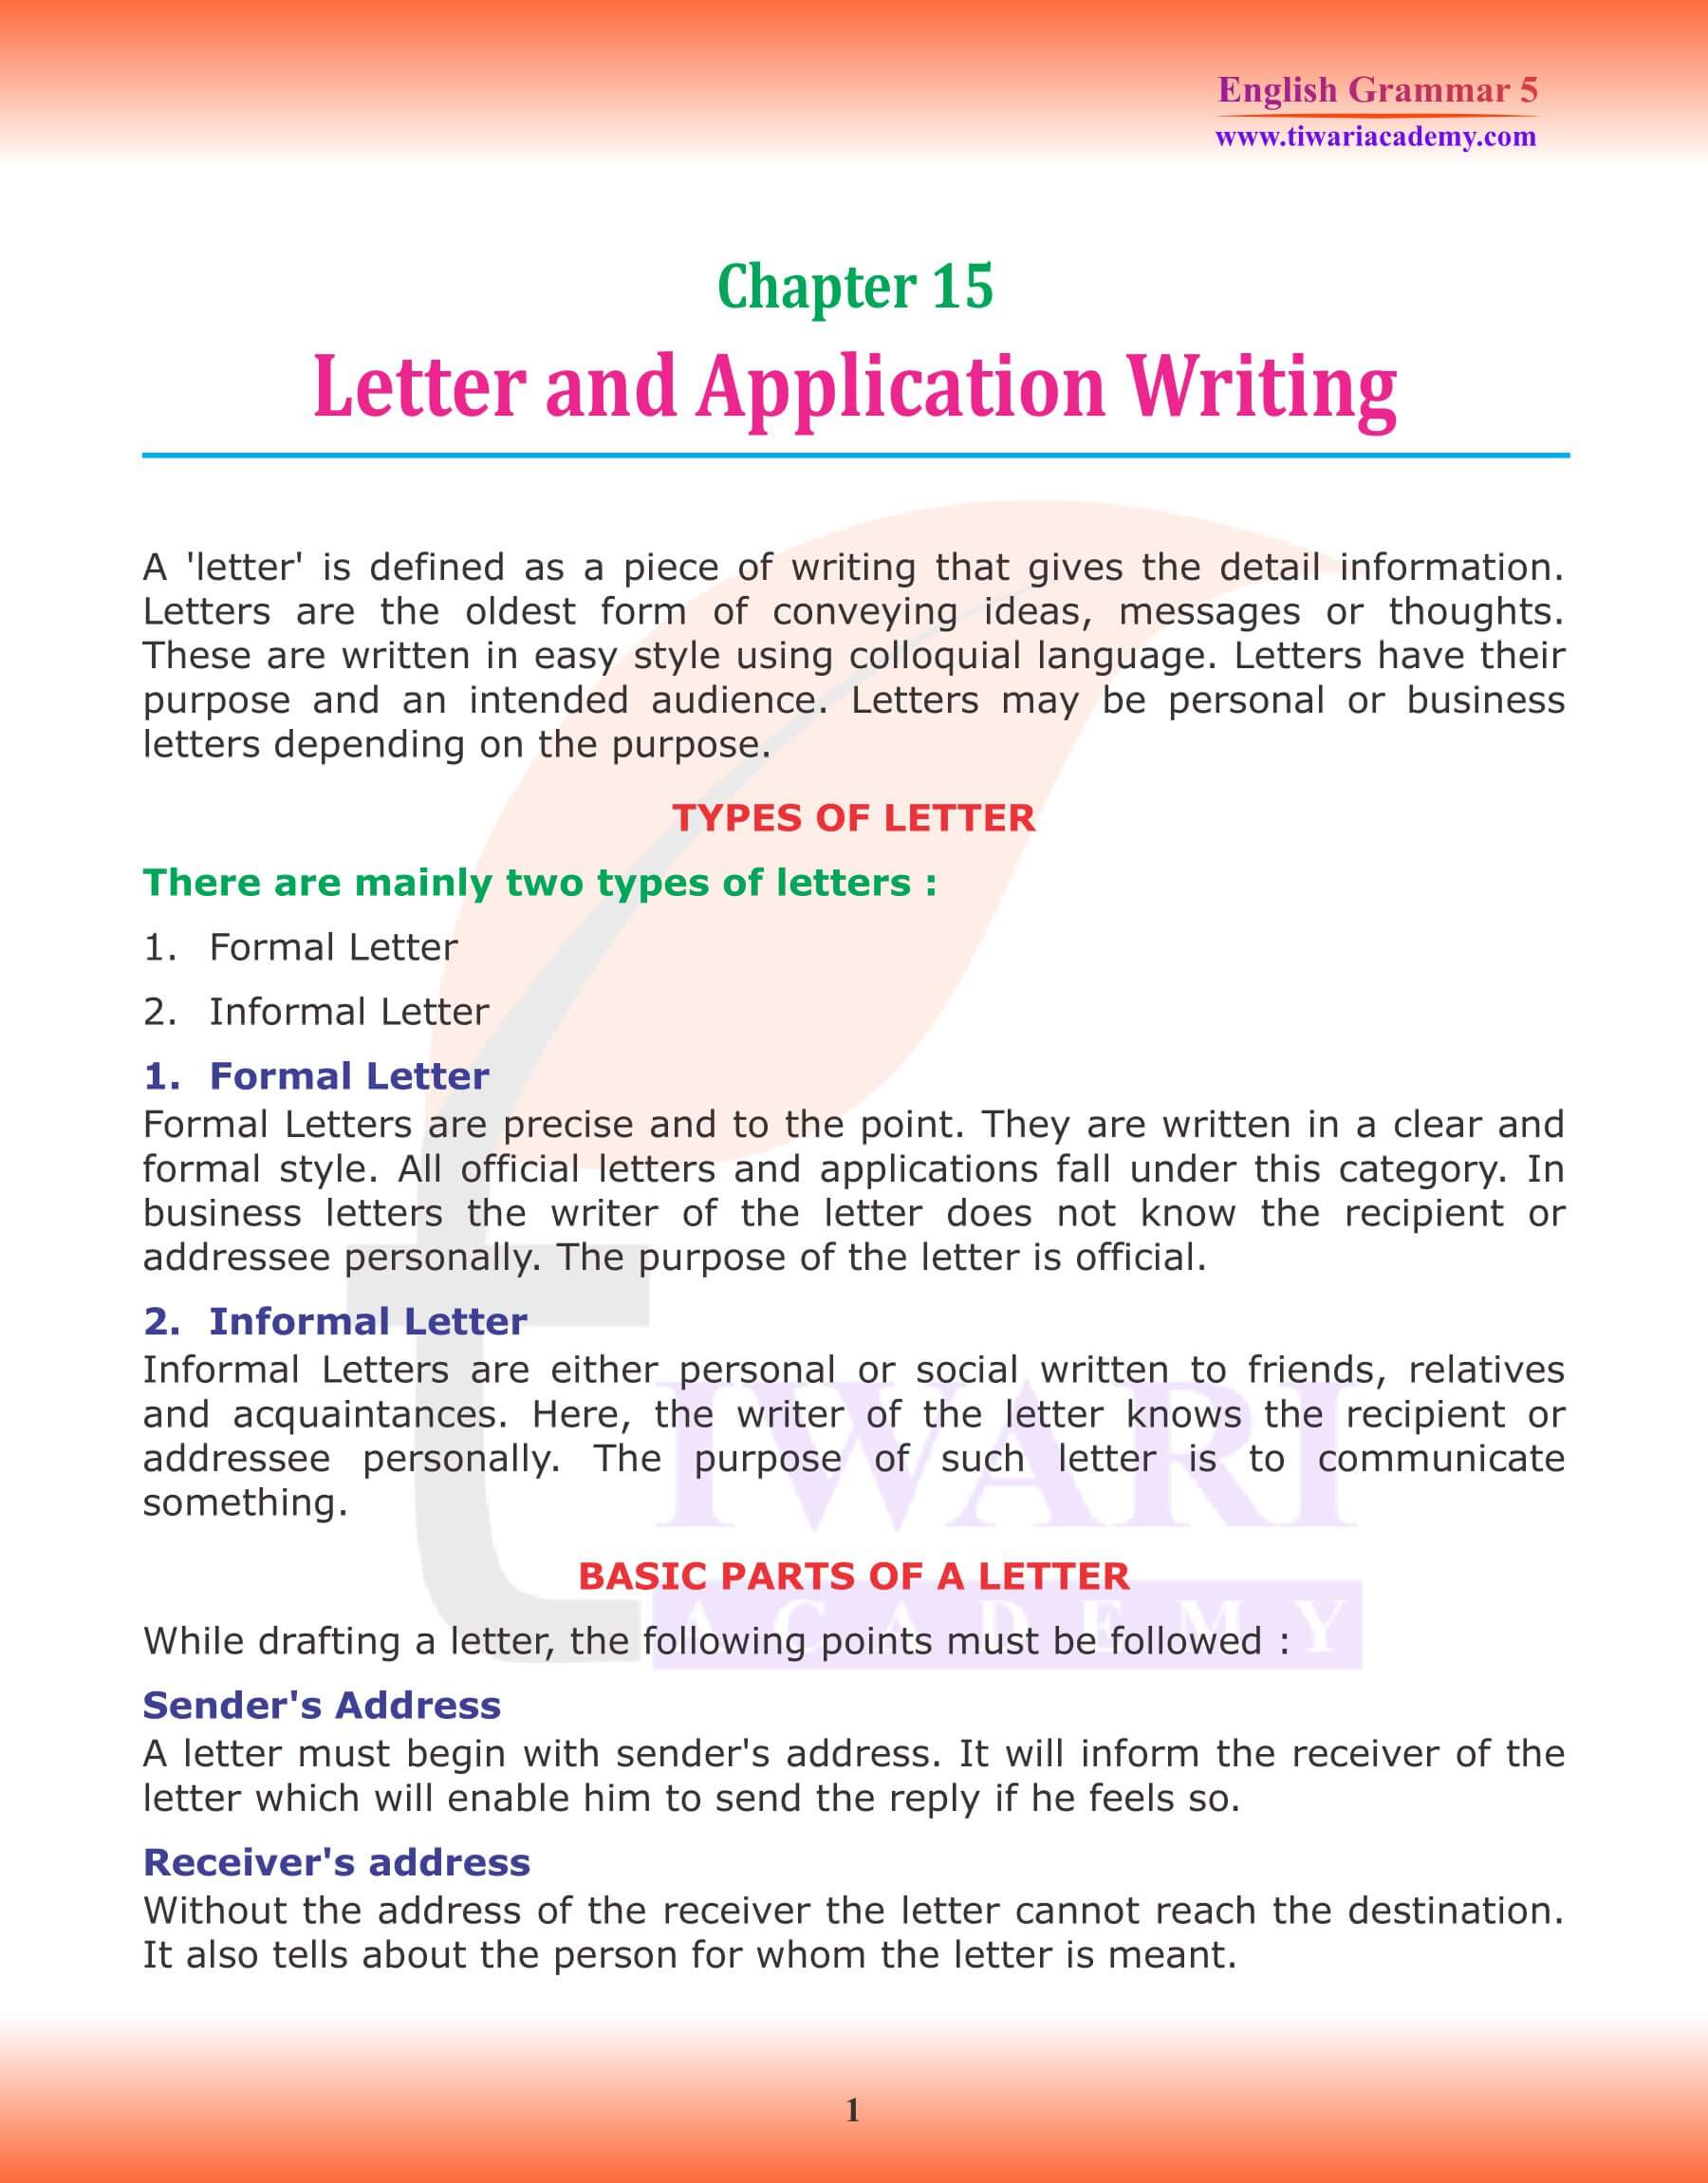 Class 5 English Grammar Chapter 15 Letter writing